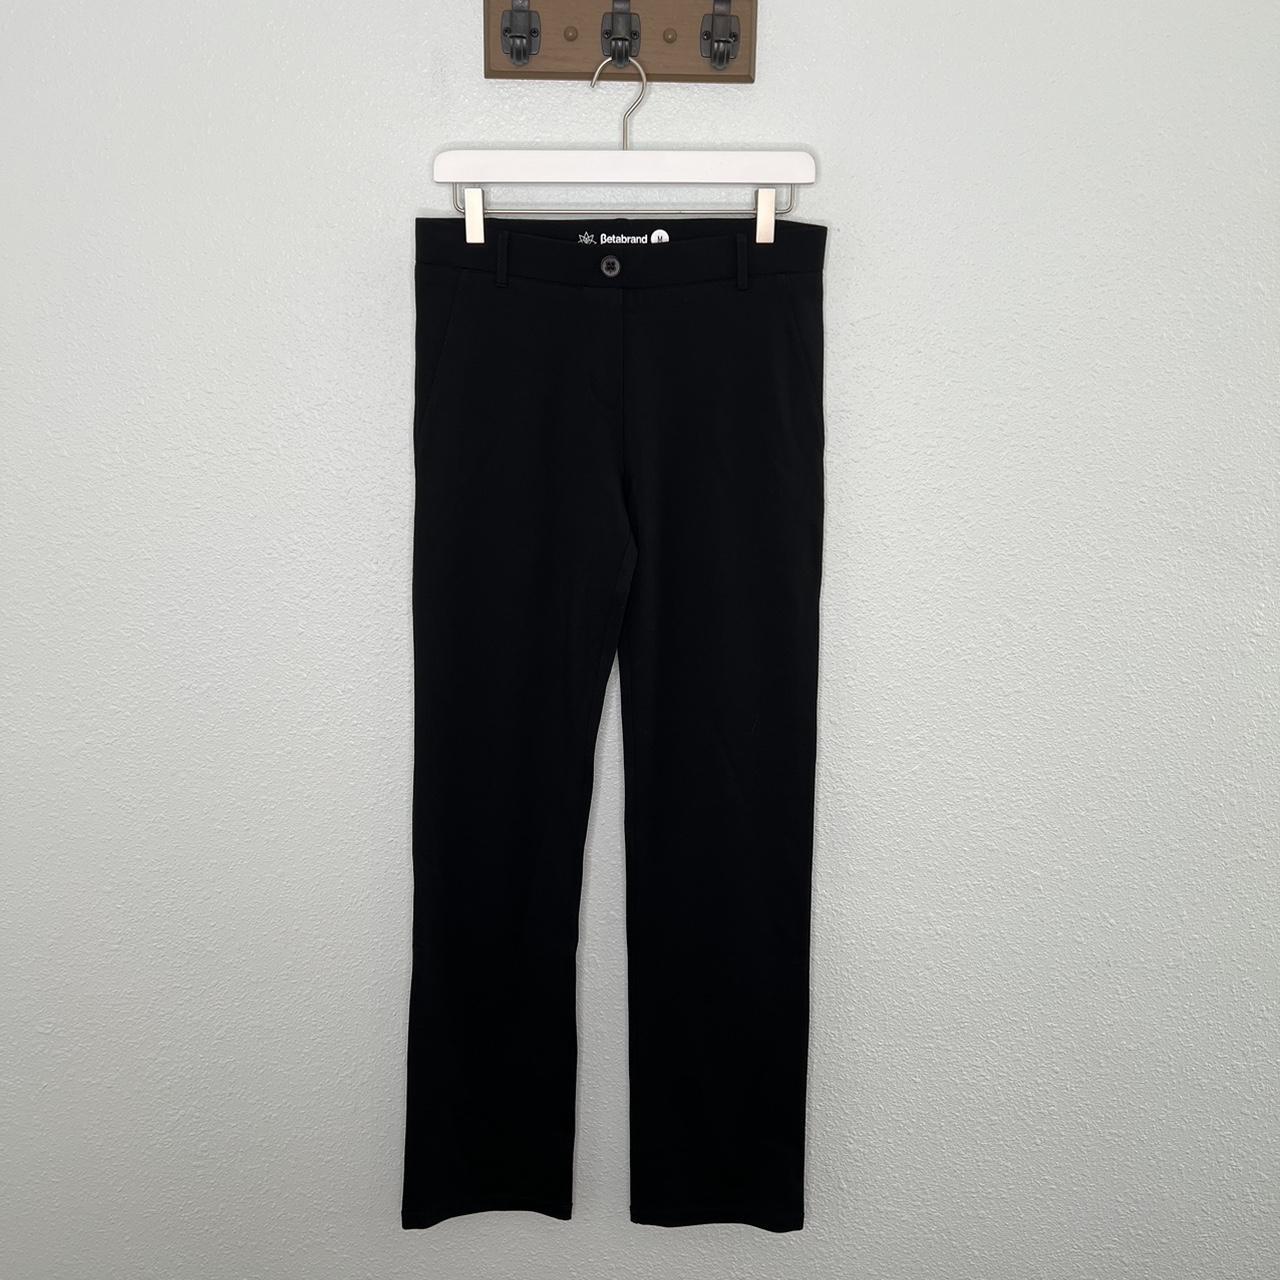 BETABRAND Boot Cut Classic Dress Pant Yoga Pants - Depop